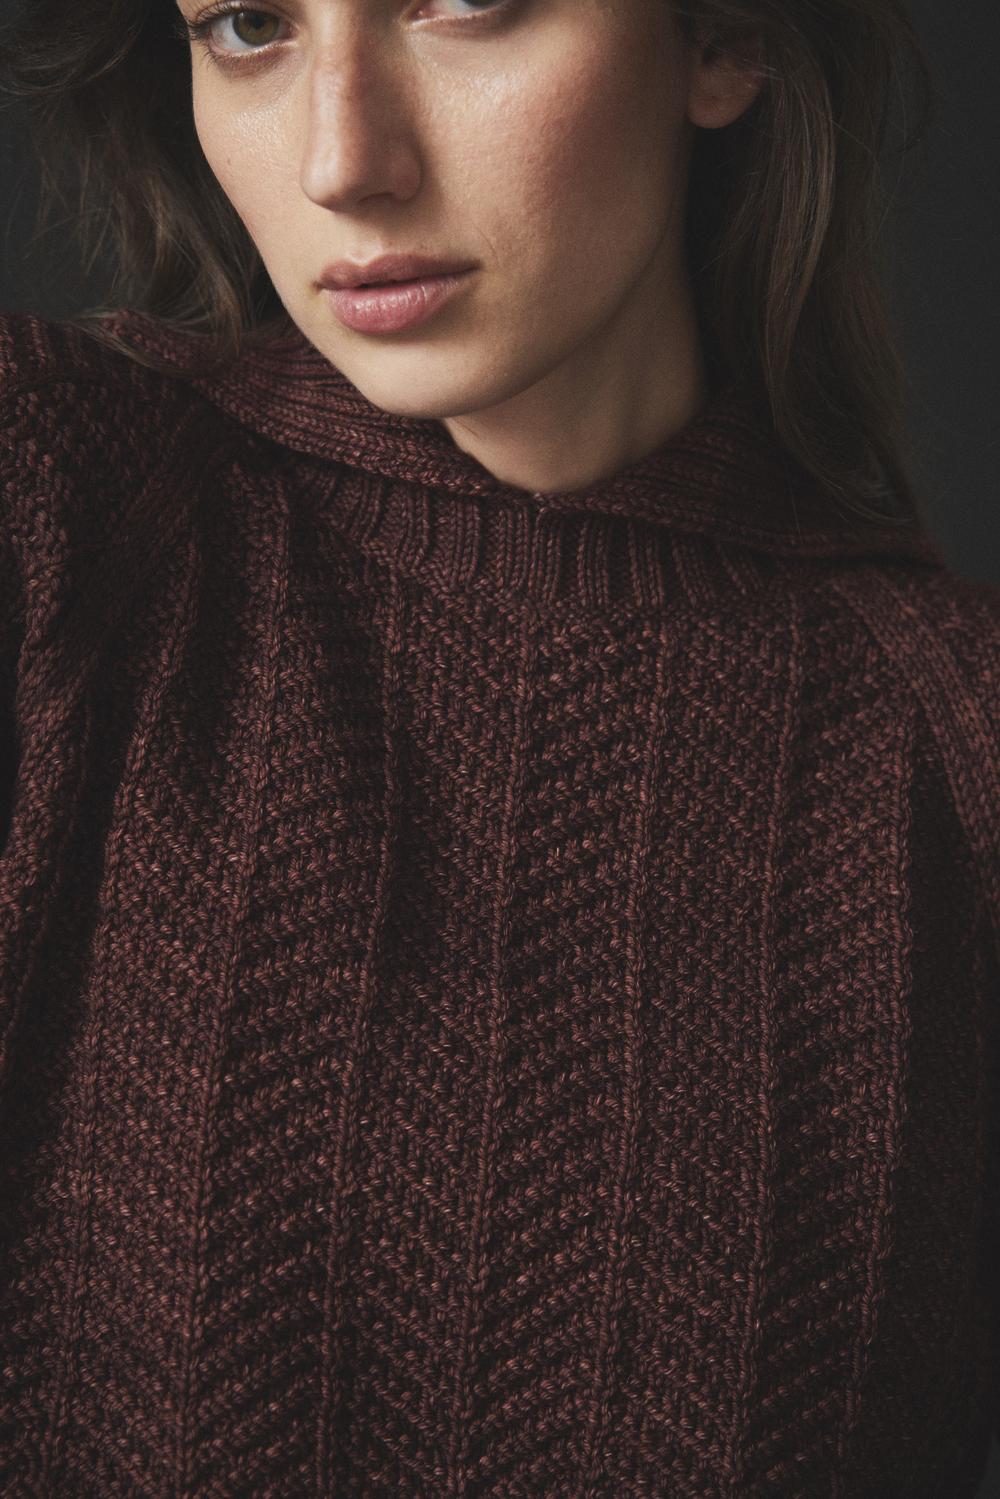 Adult Fishbone Sweater